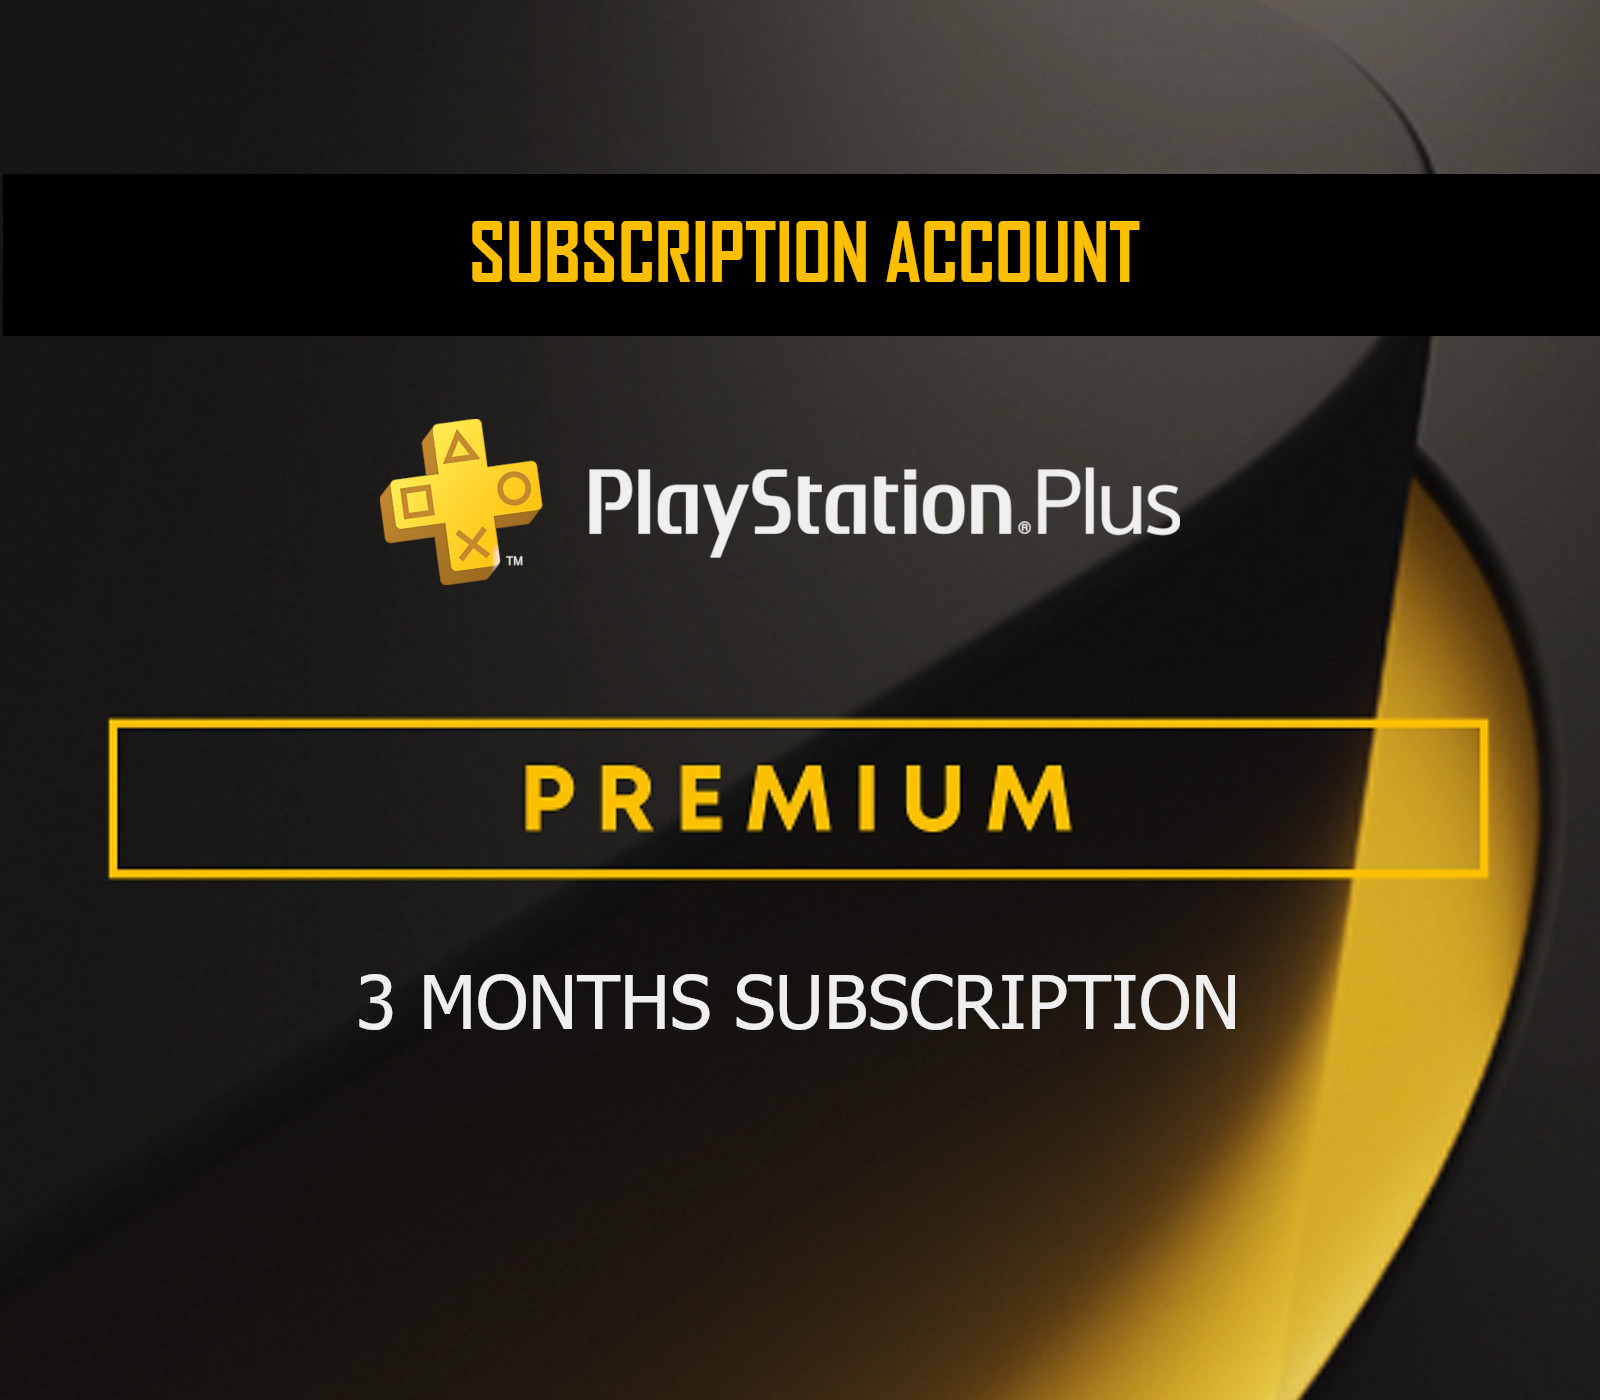 PlayStation Plus Premium 3 Months Subscription ACCOUNT